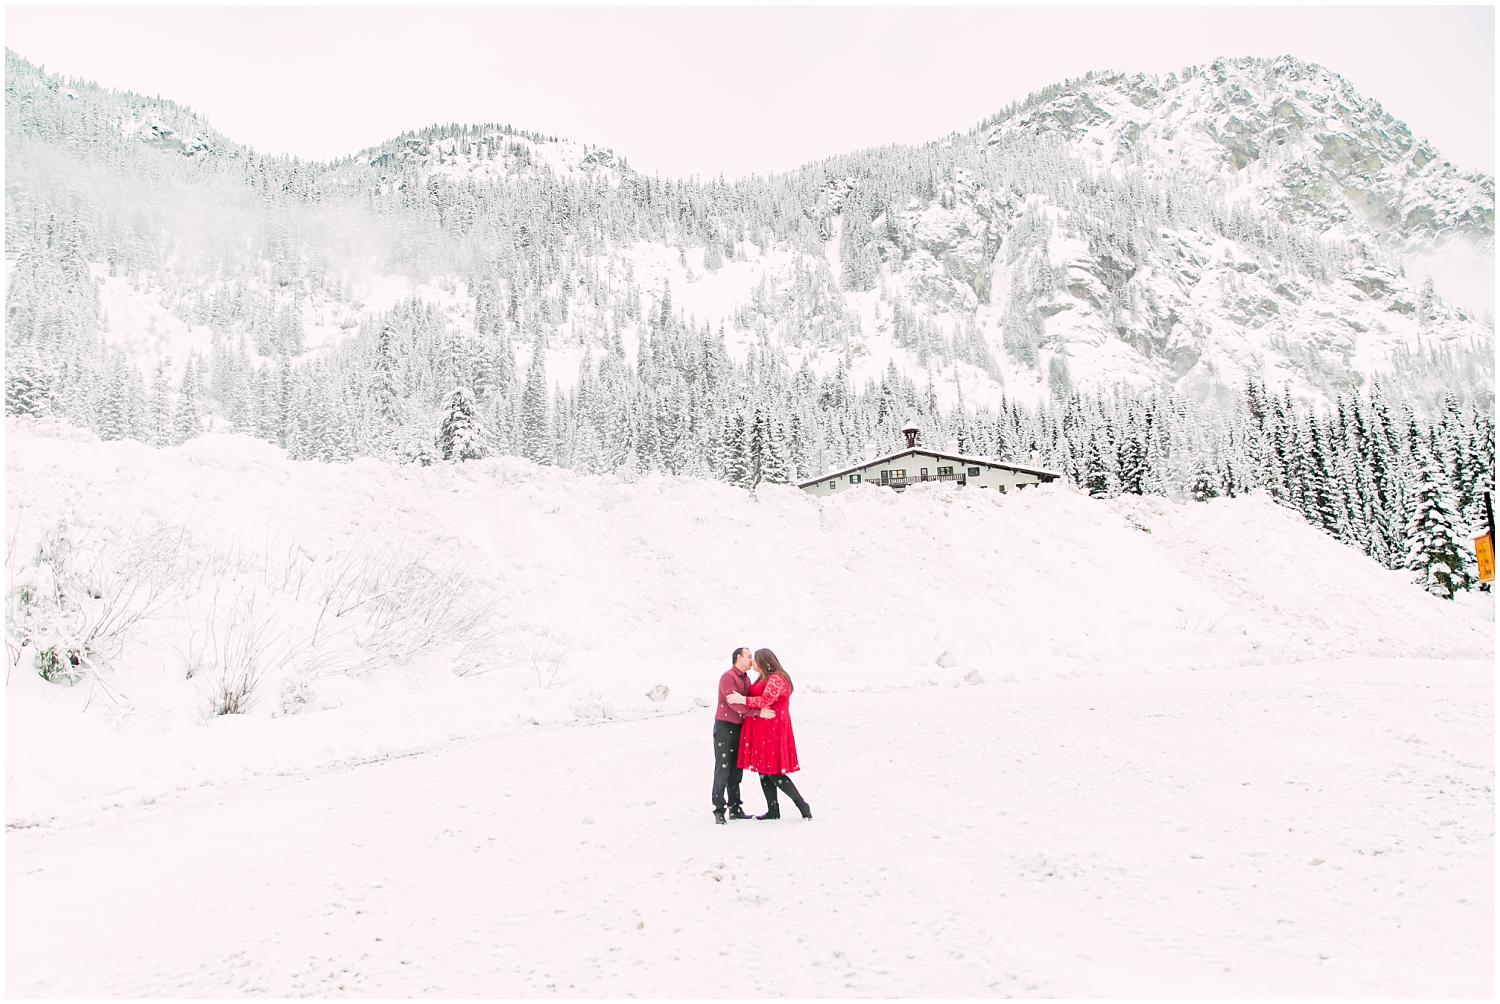 Winter Alpental Engagement | Teo & Brittany